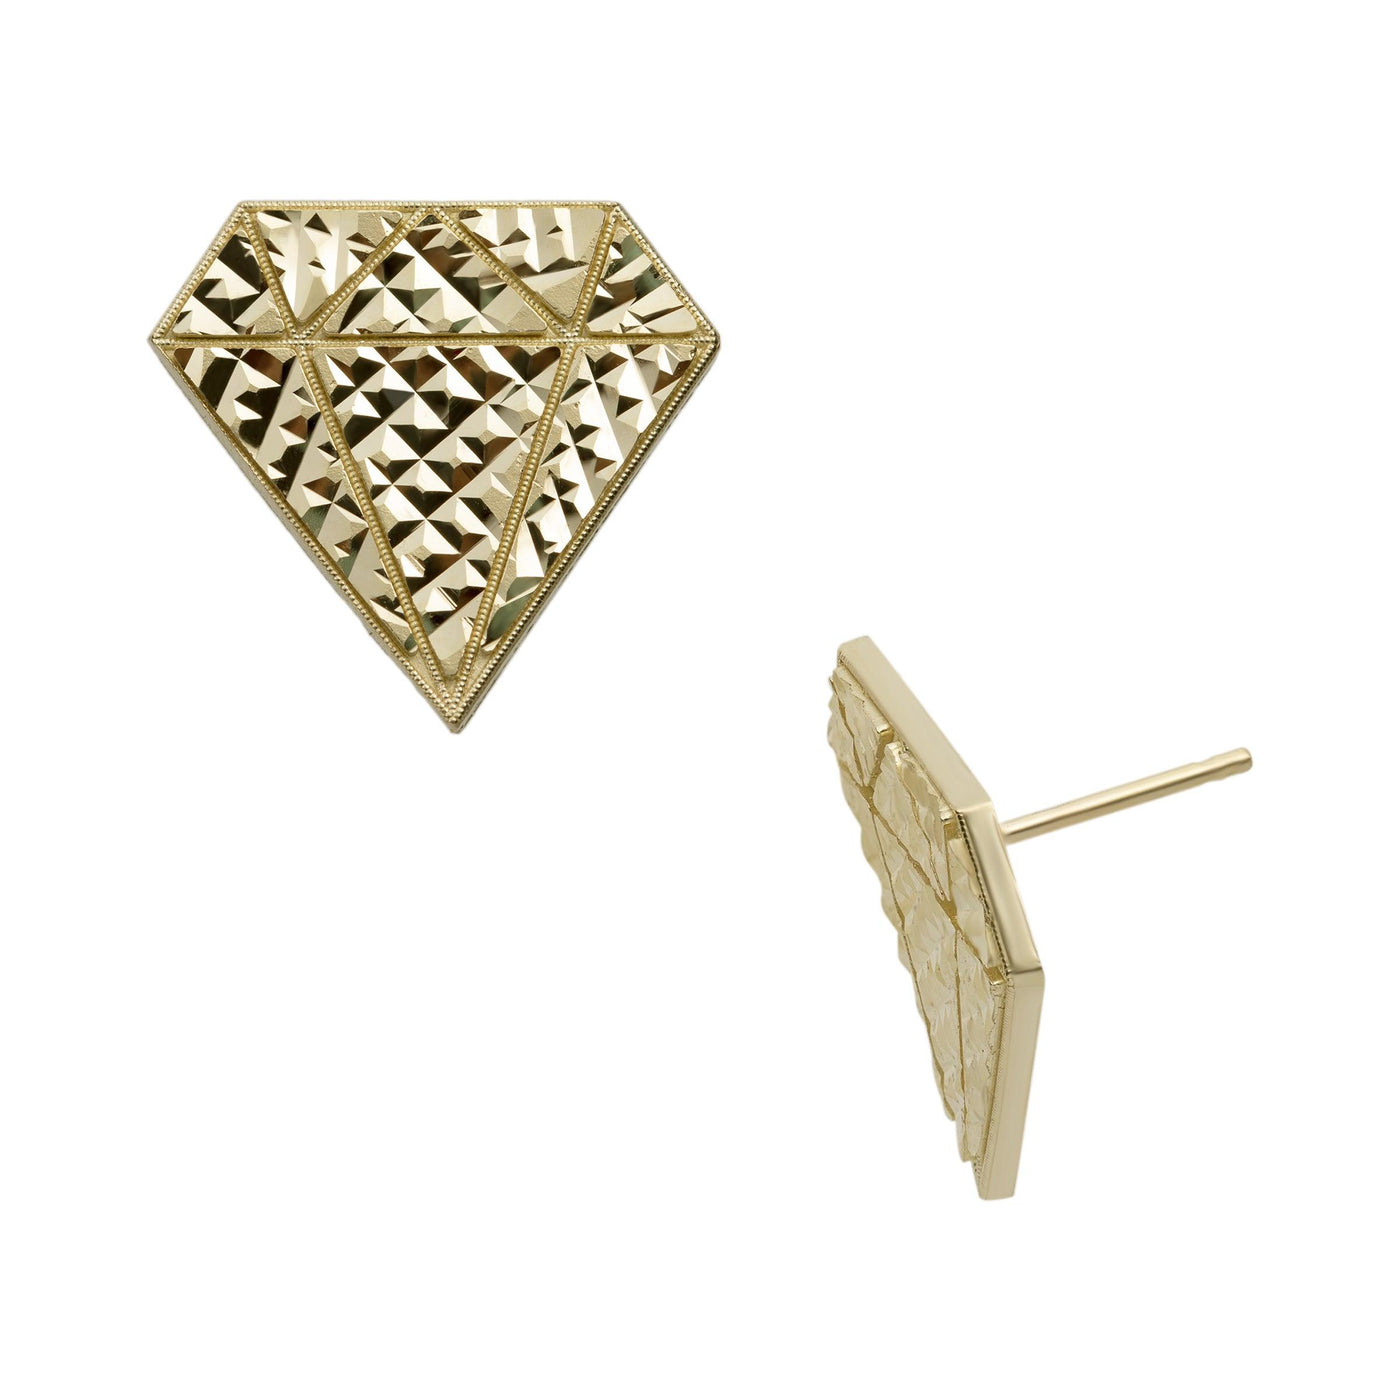 3/4" Women's Textured Diamond Shaped Stud Earrings Solid 10K Yellow Gold - bayamjewelry